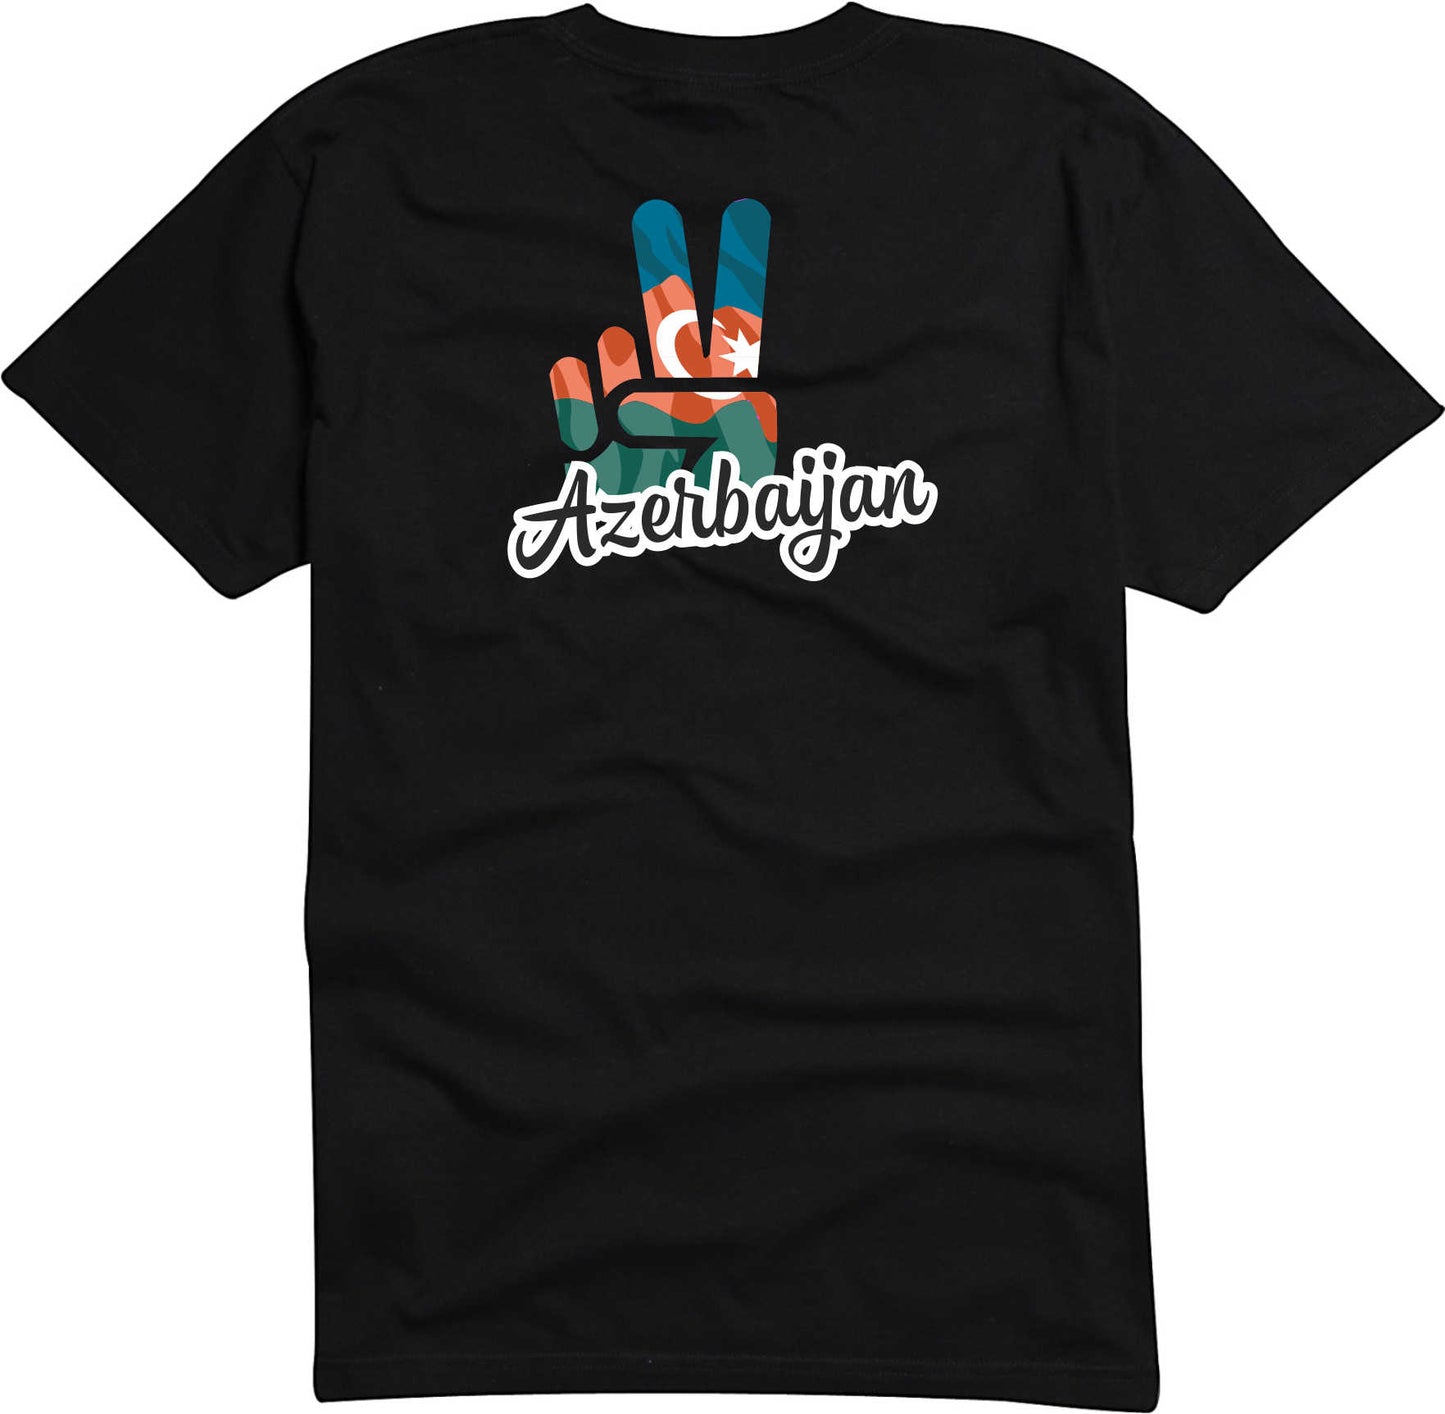 T-Shirt Herren - Victory - Flagge / Fahne - Azerbaijan - Sieg